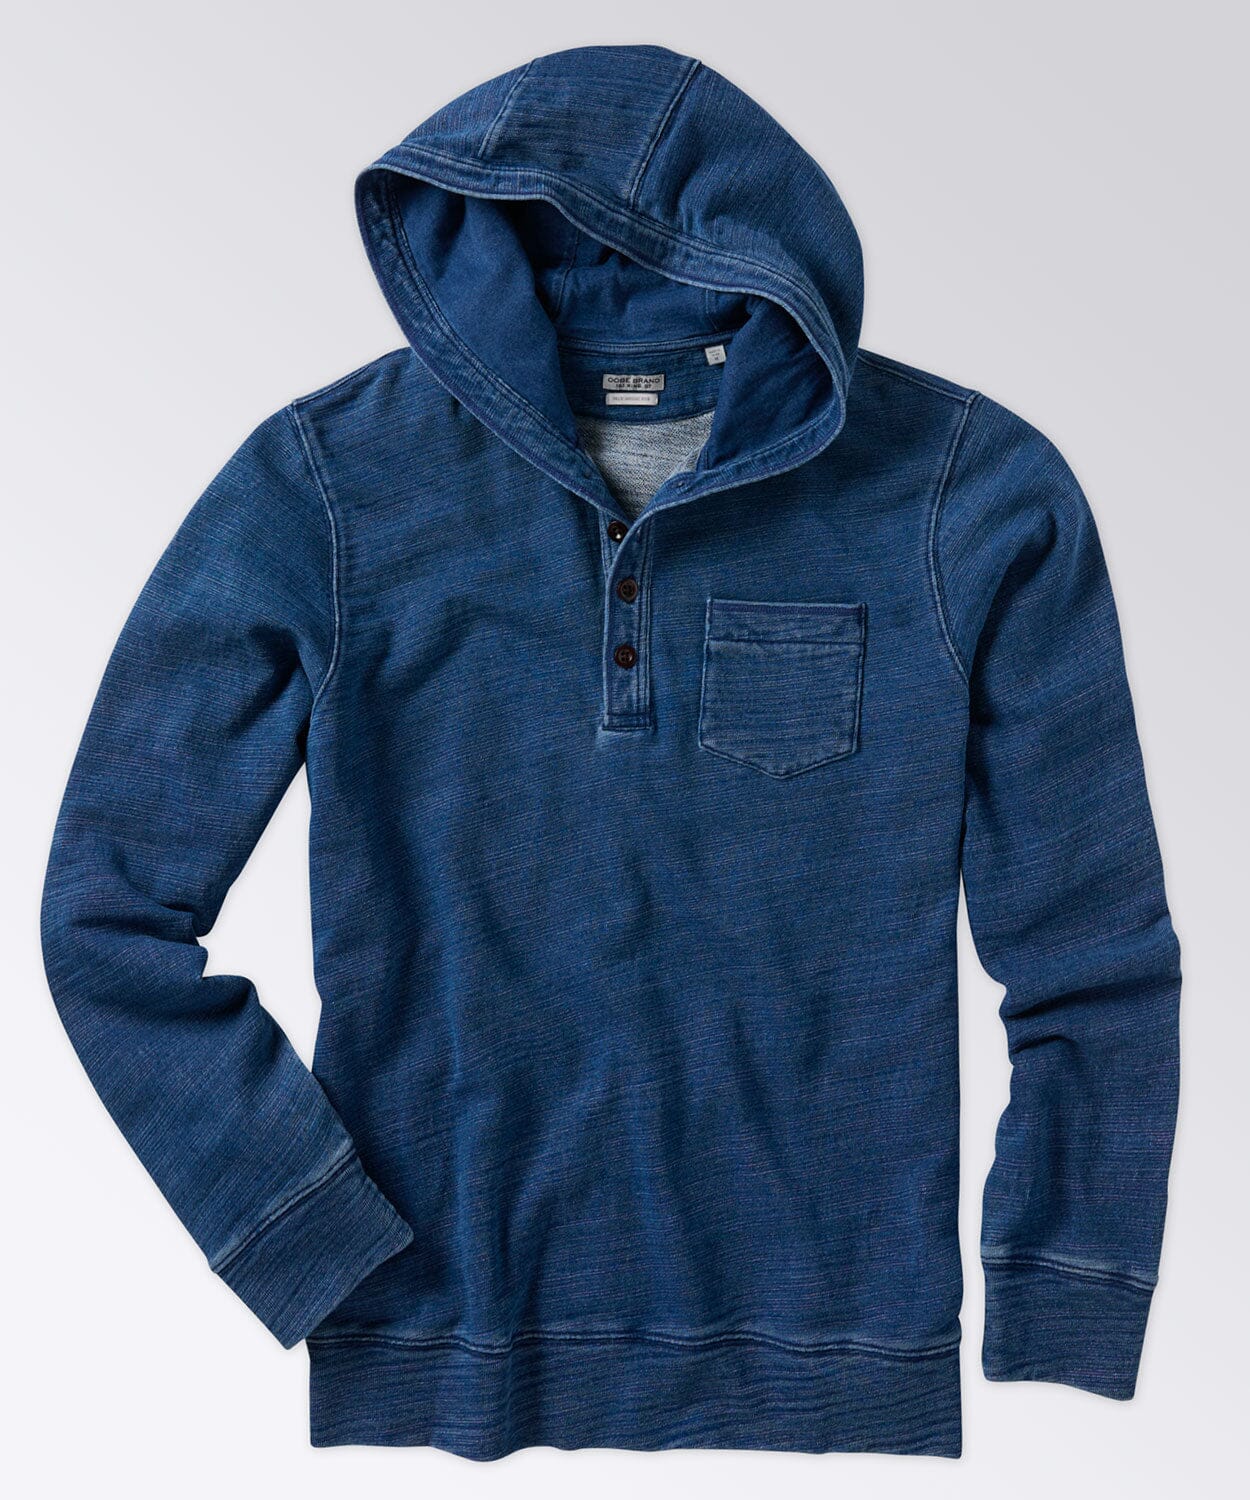 Indigo Blue Collection by OOBE Premium Menswear | BRAND